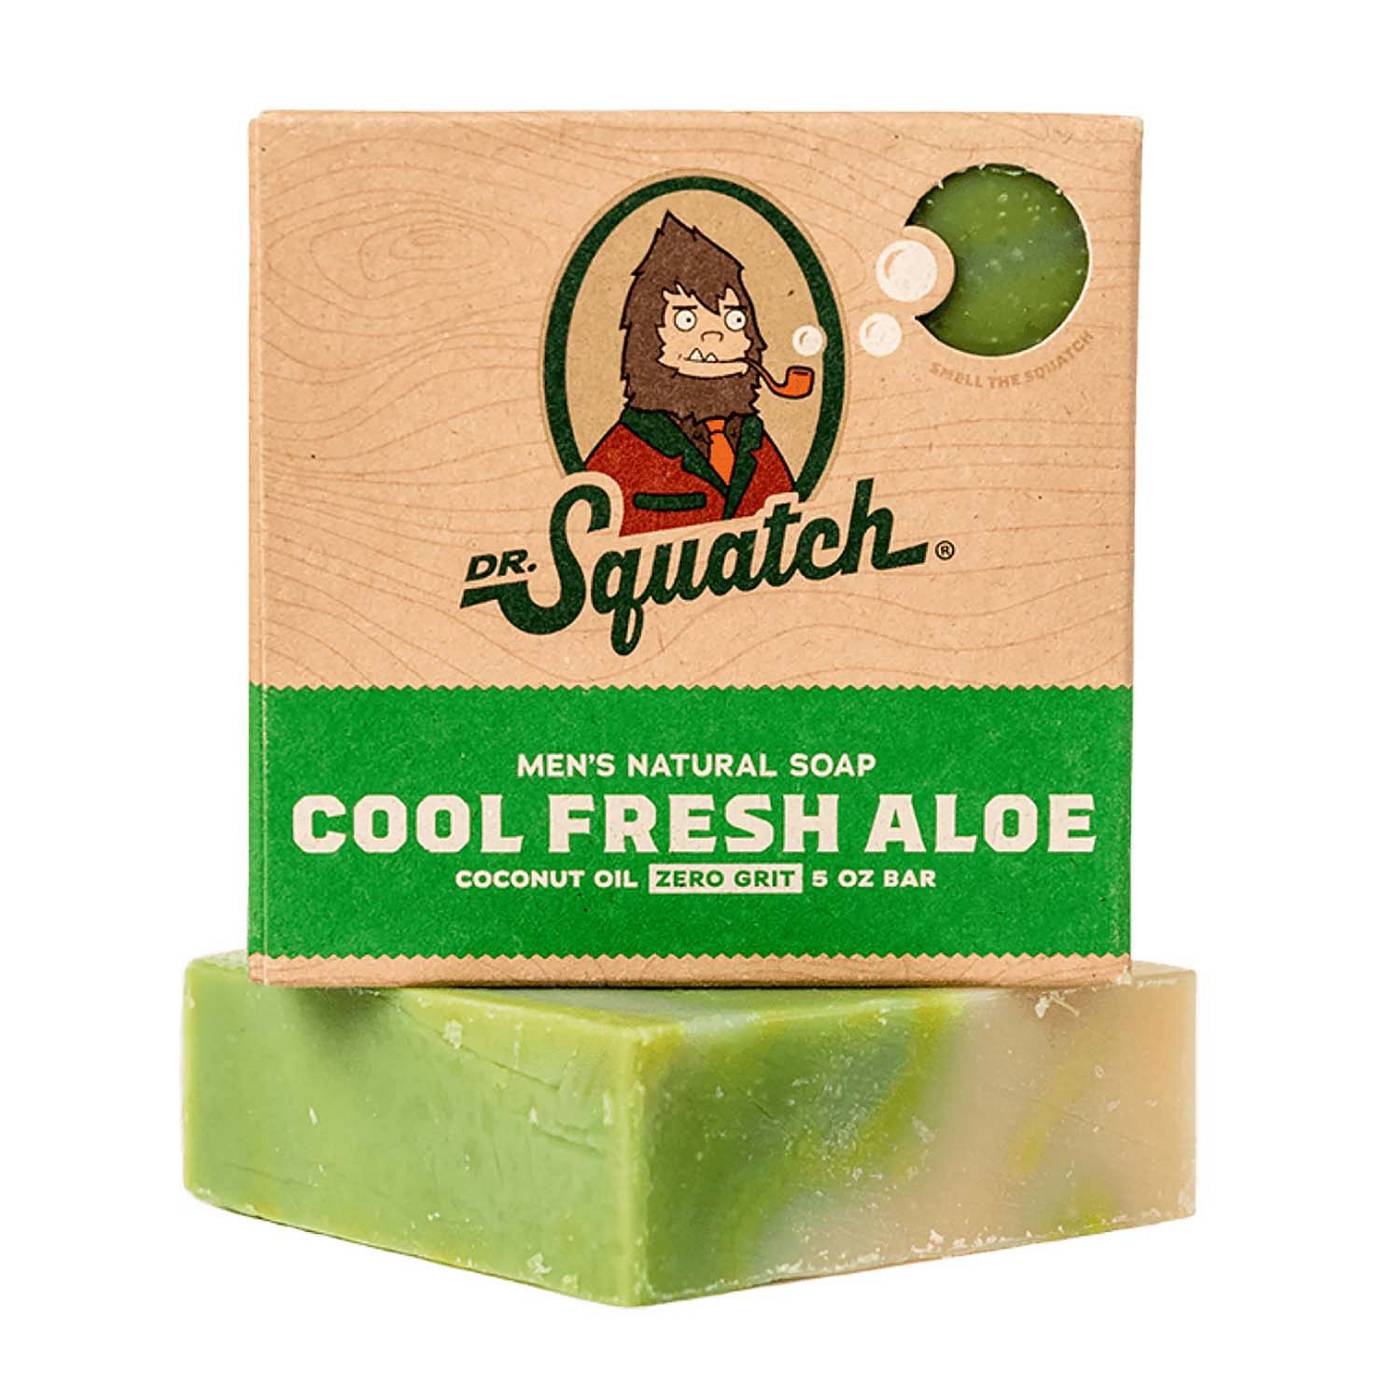 Dr. Squatch Men's Natural Soap - Cool Fresh Aloe; image 2 of 2